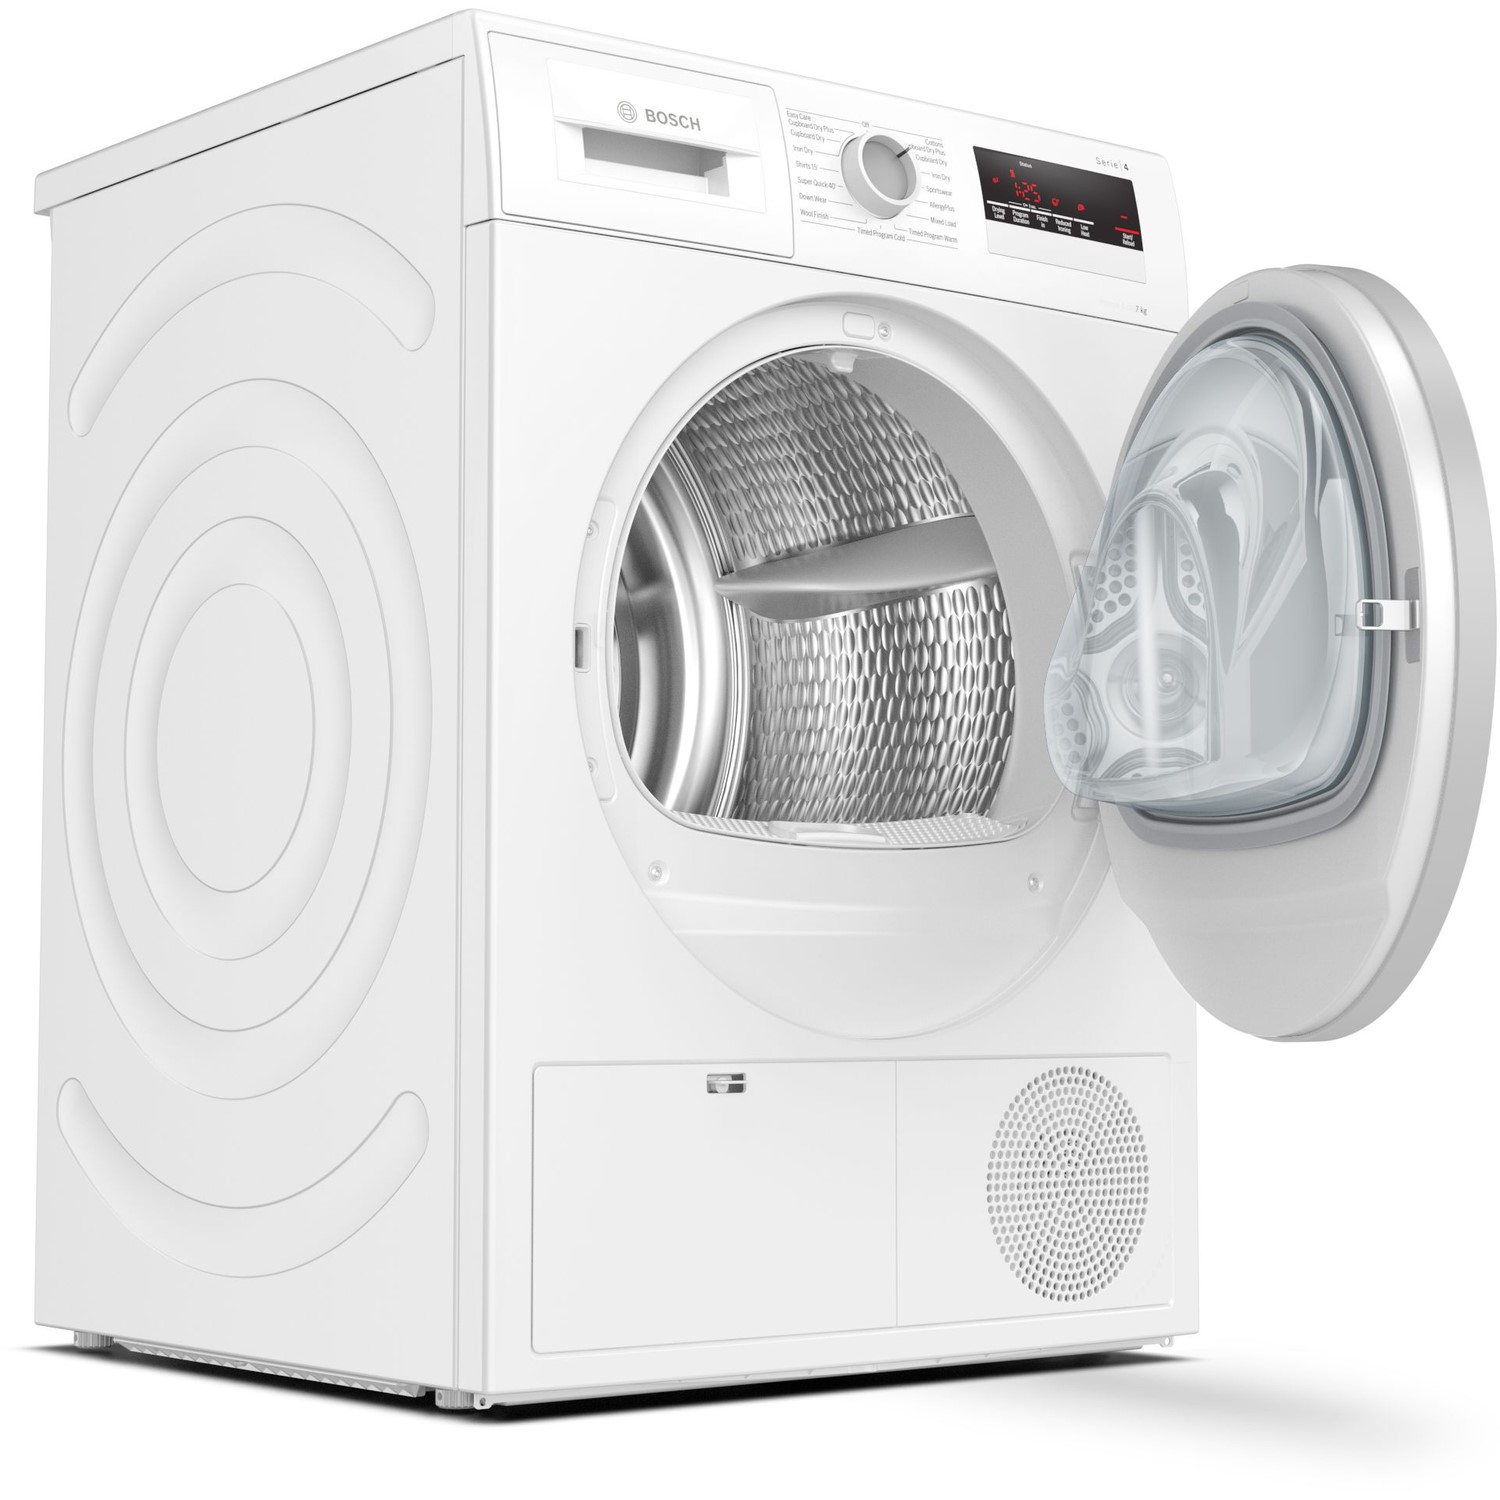 Bosch Series 4 7kg Freestanding Condenser Tumble Dryer - White | Appliances